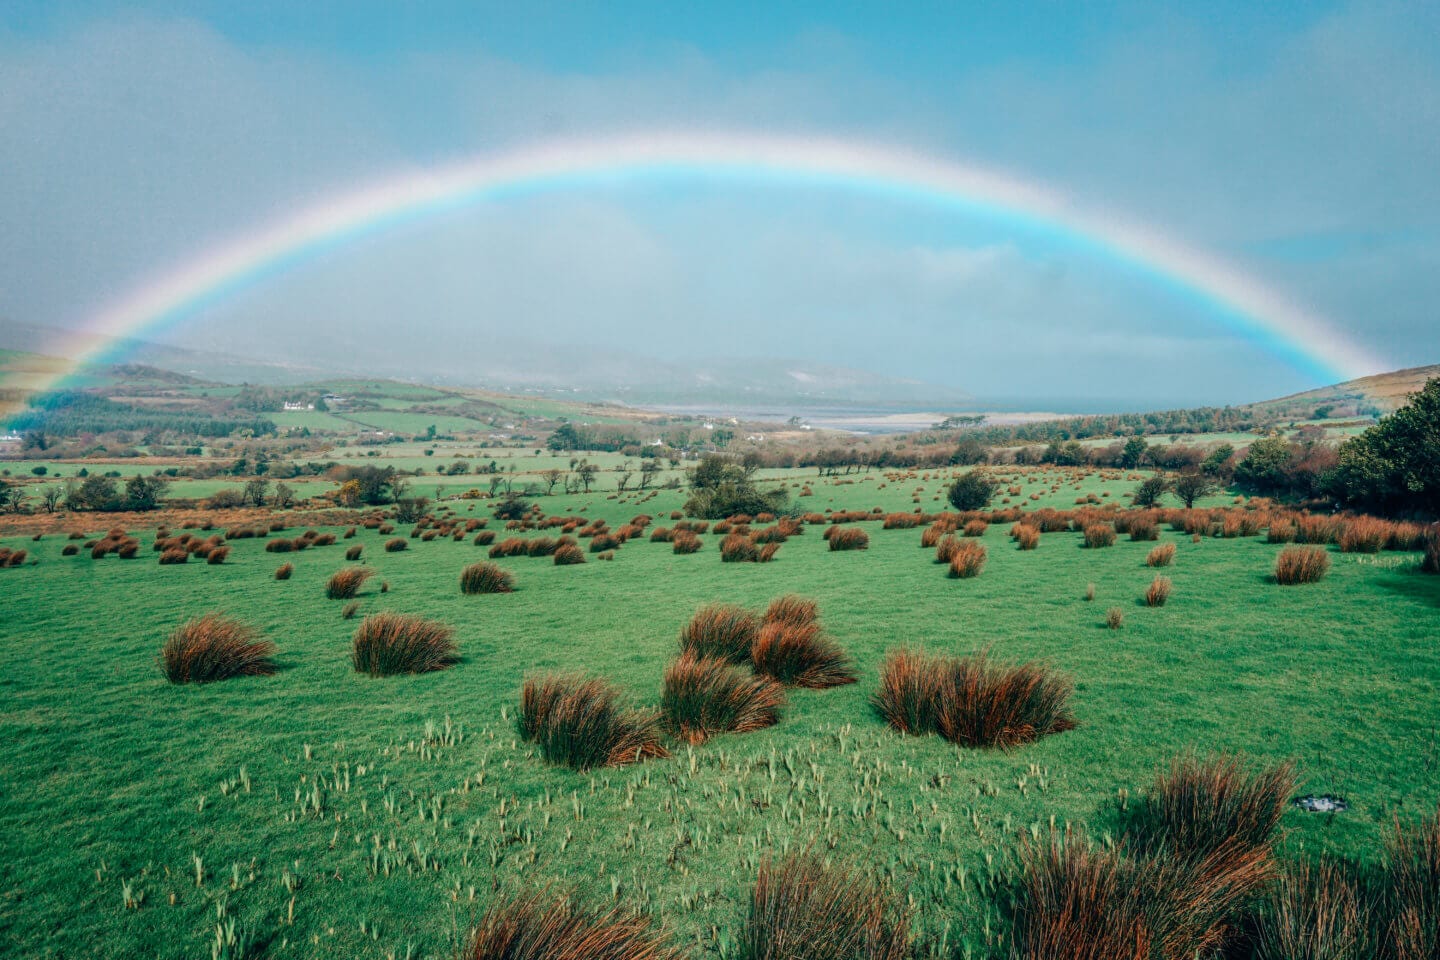 Beautiful rainbow over a green field in Ireland